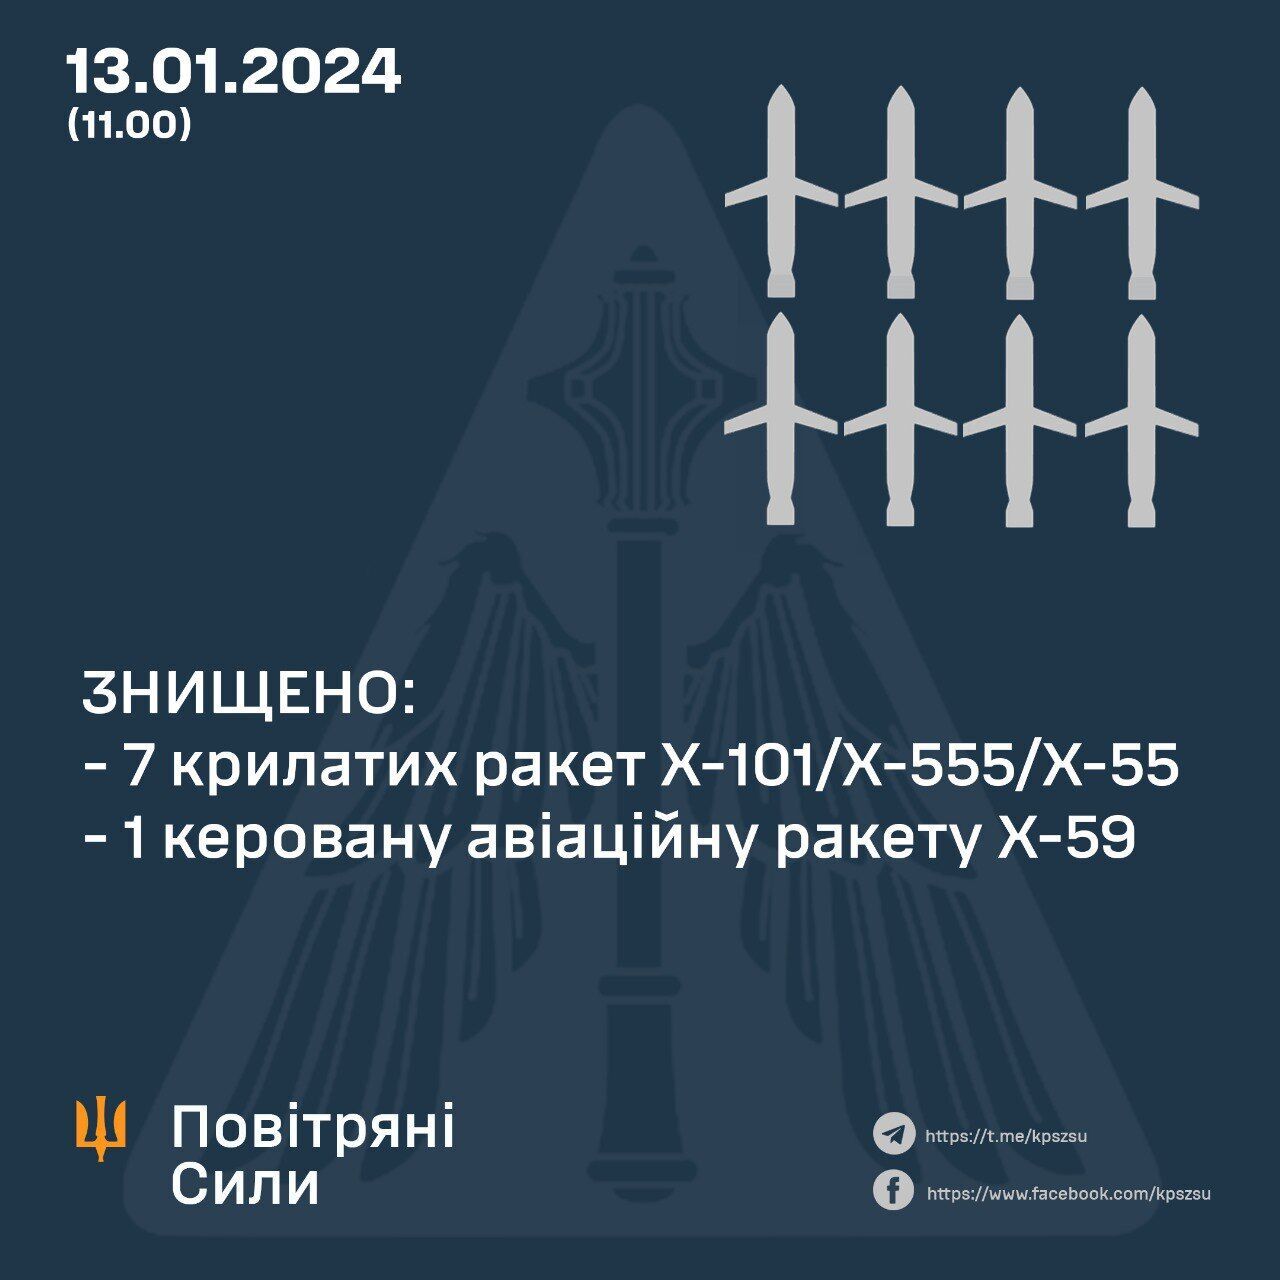 Українська ППО знищила 8 крилатих ракет під час ранкової масованої атаки РФ